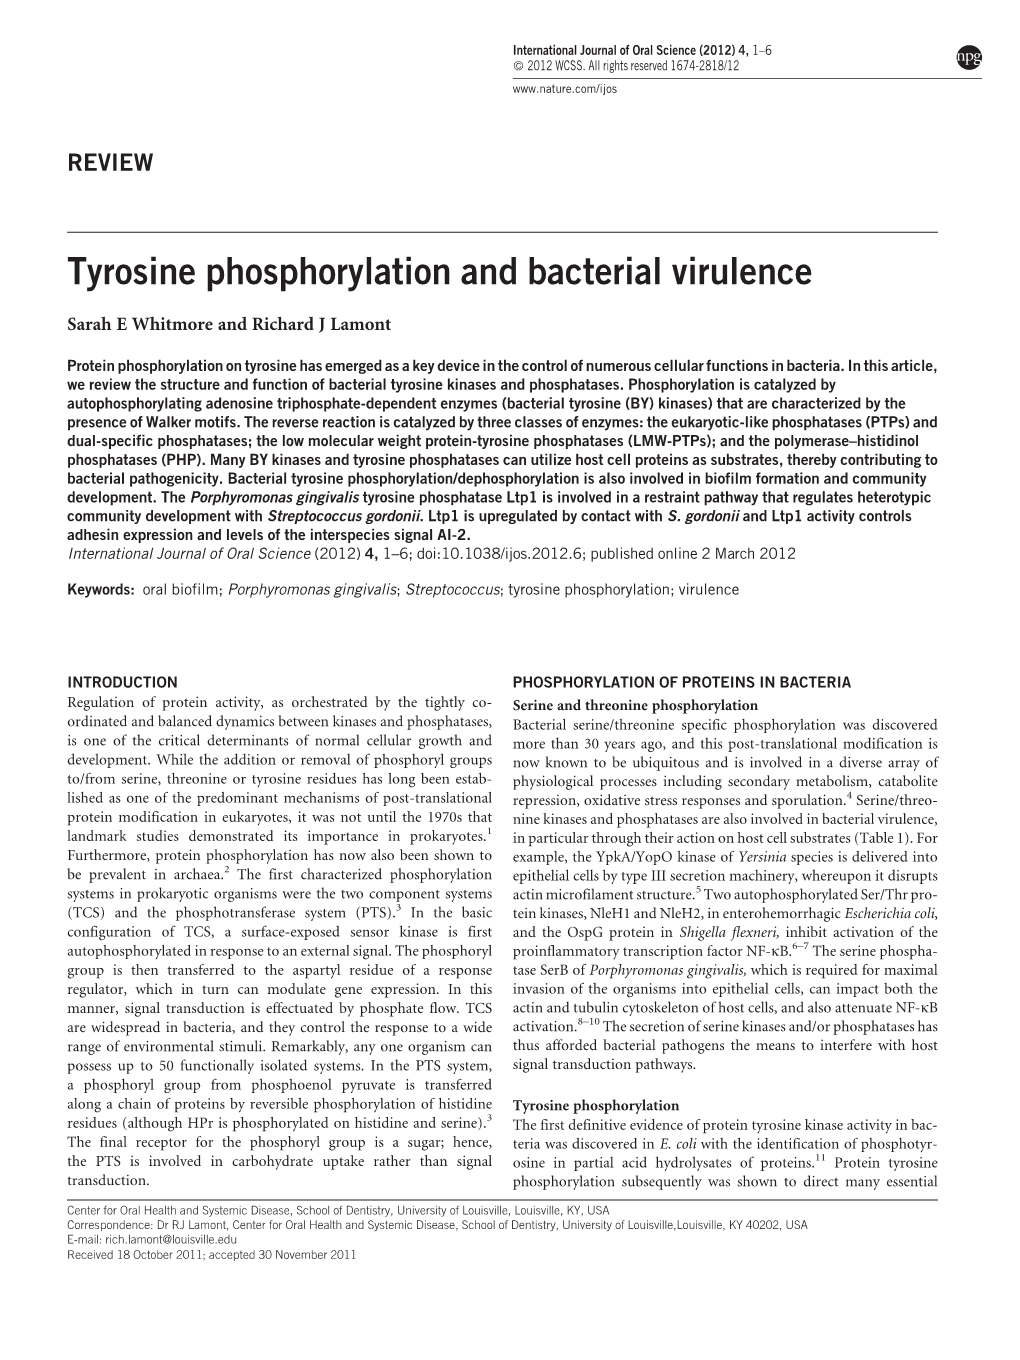 Tyrosine Phosphorylation and Bacterial Virulence